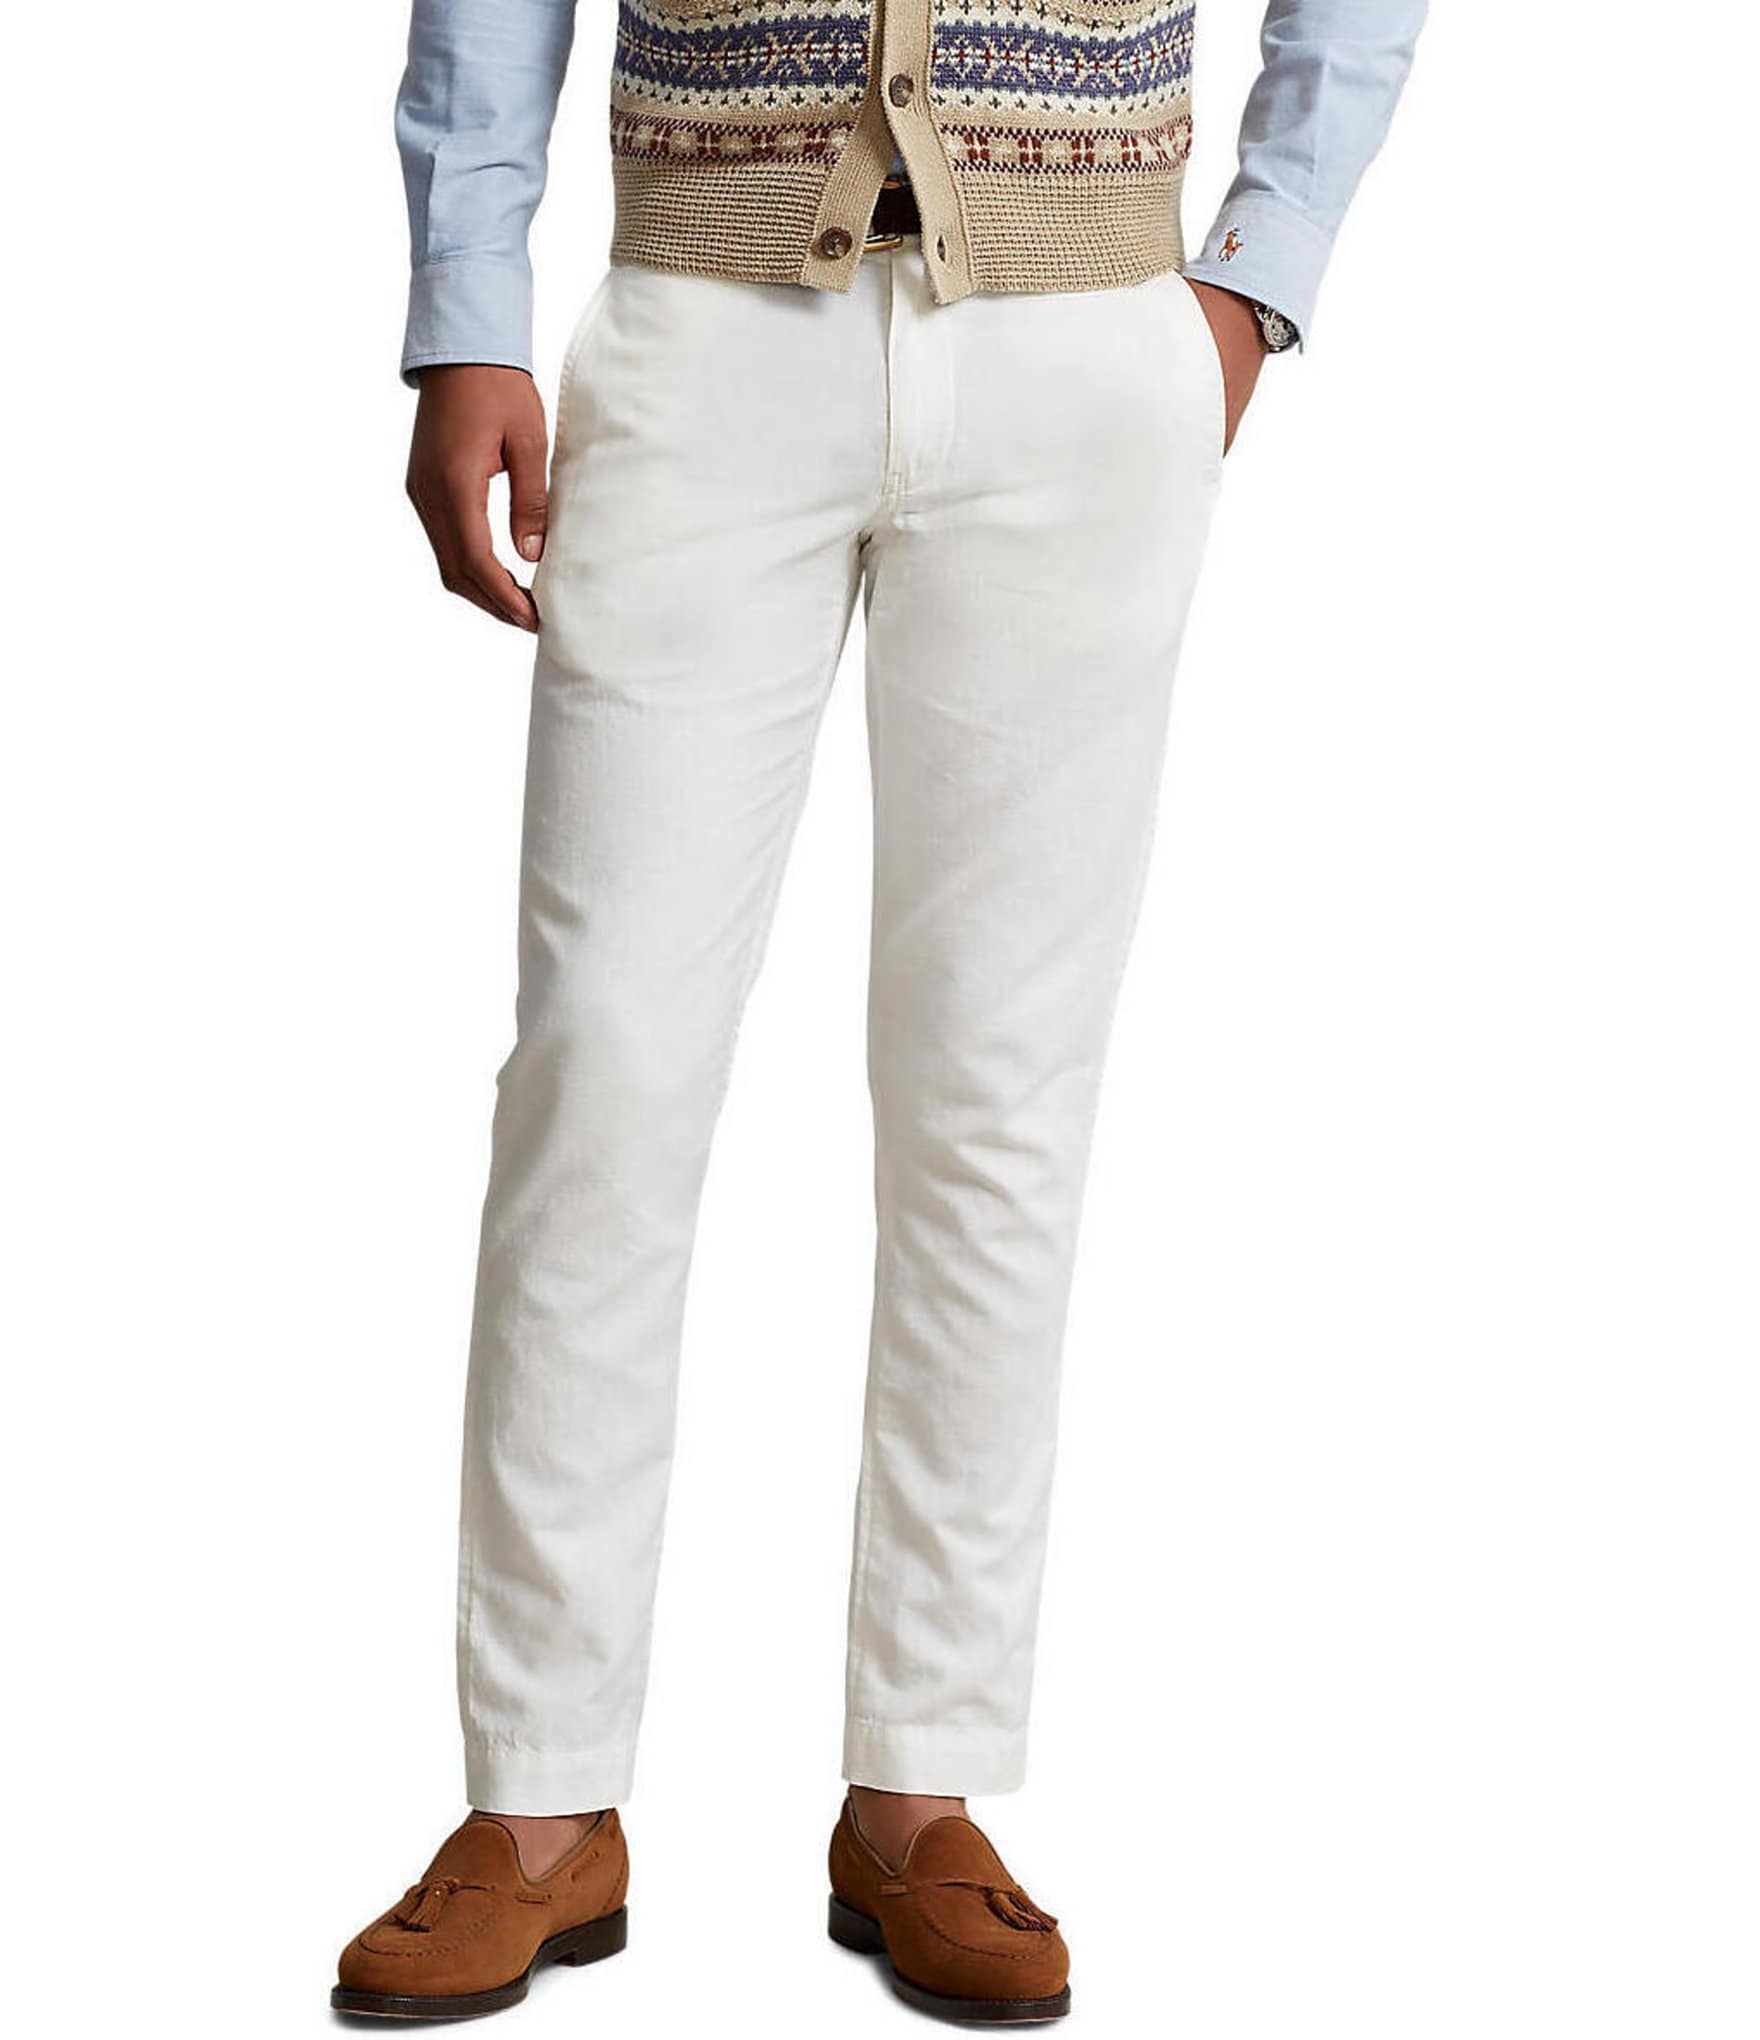 Ralph Lauren Kids Bedford Pants: Soft Cotton Blend